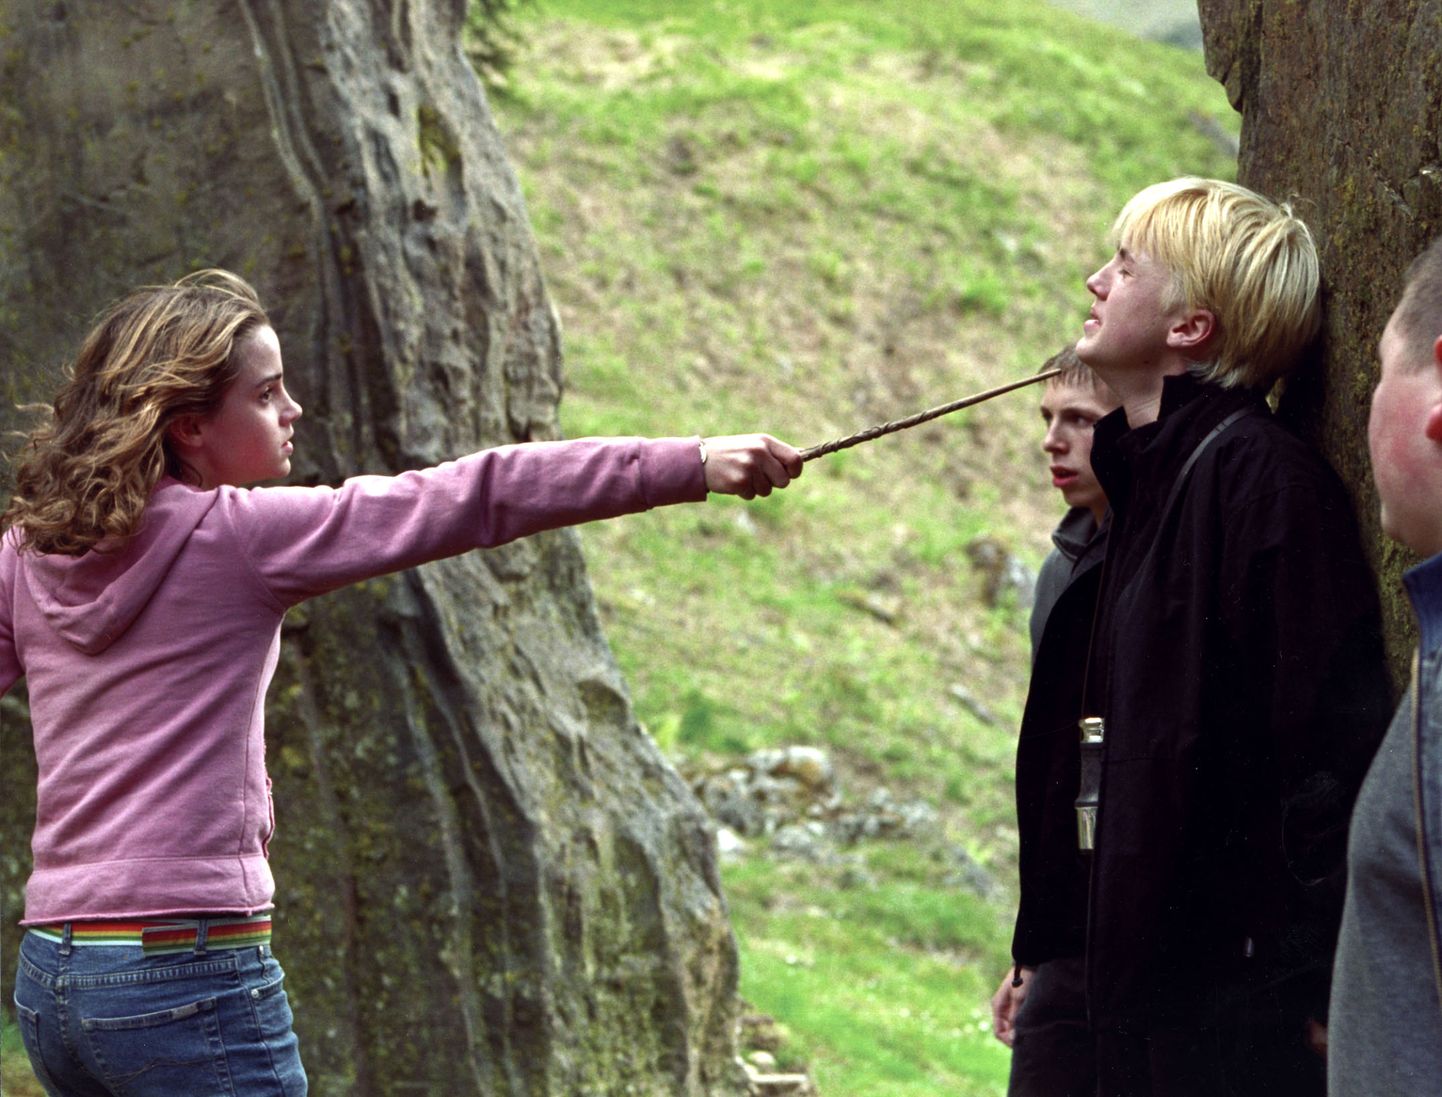 Кадр из фильма "Гарри Поттер и узник Азкабана".